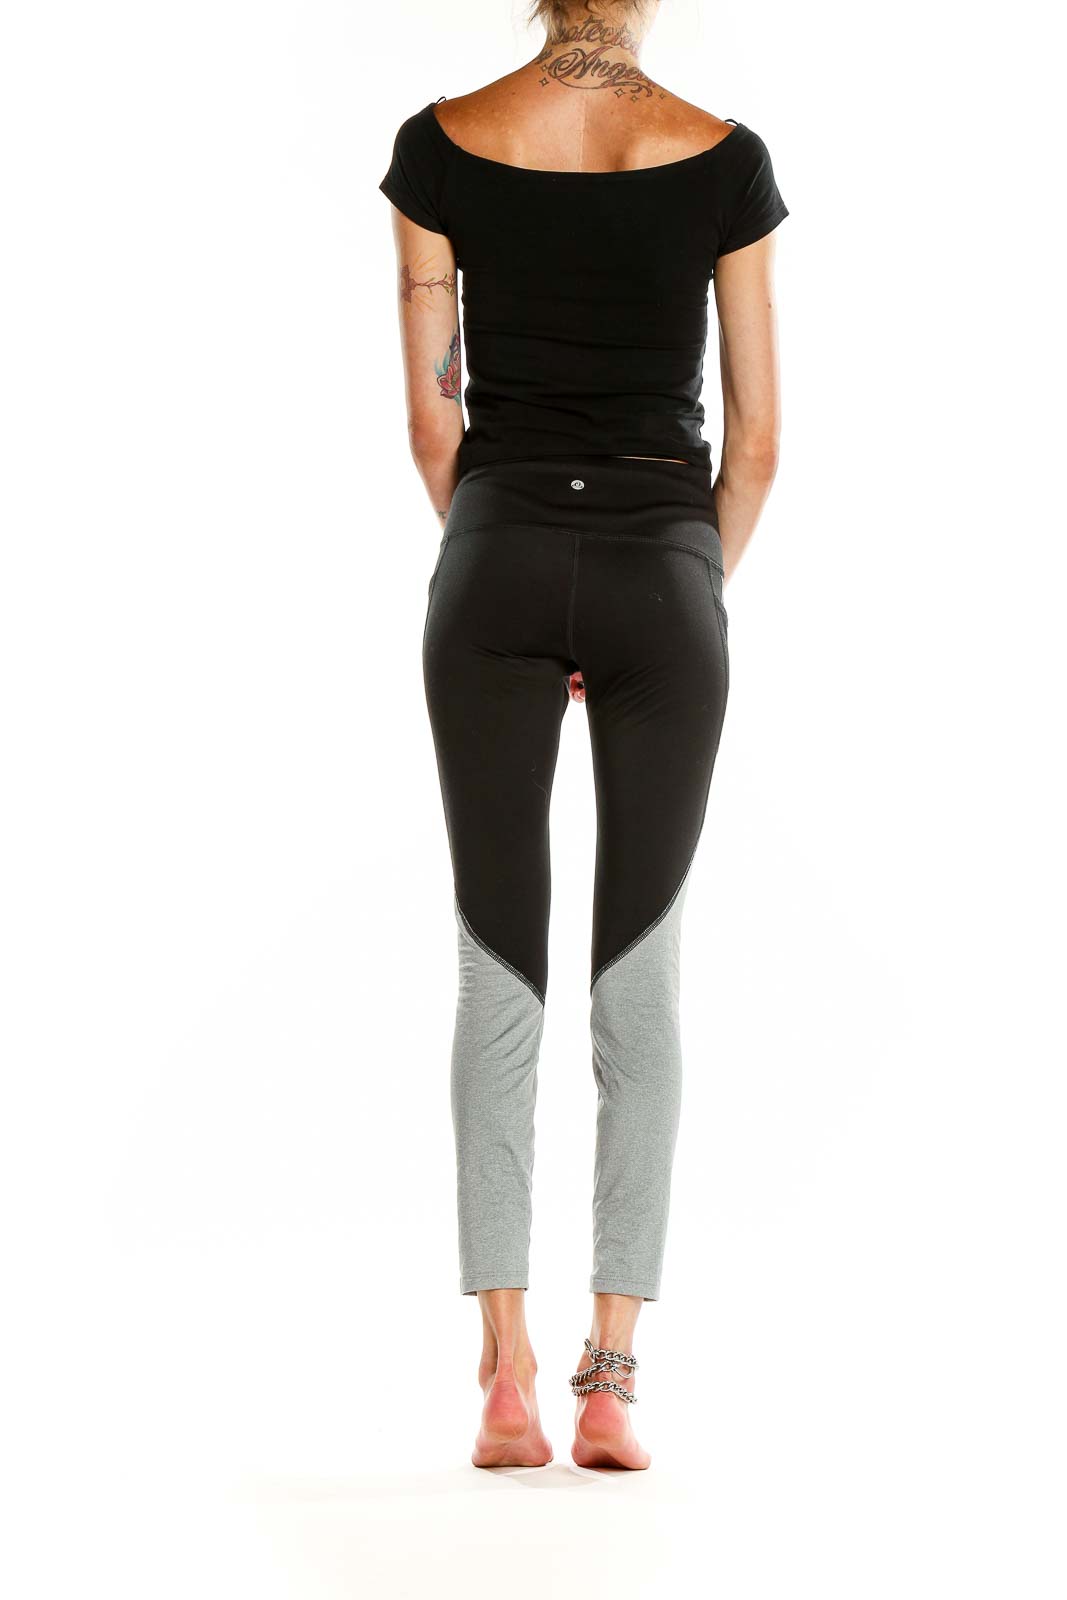 apana - Gray Black Colorblock Activewear Leggings Polyester